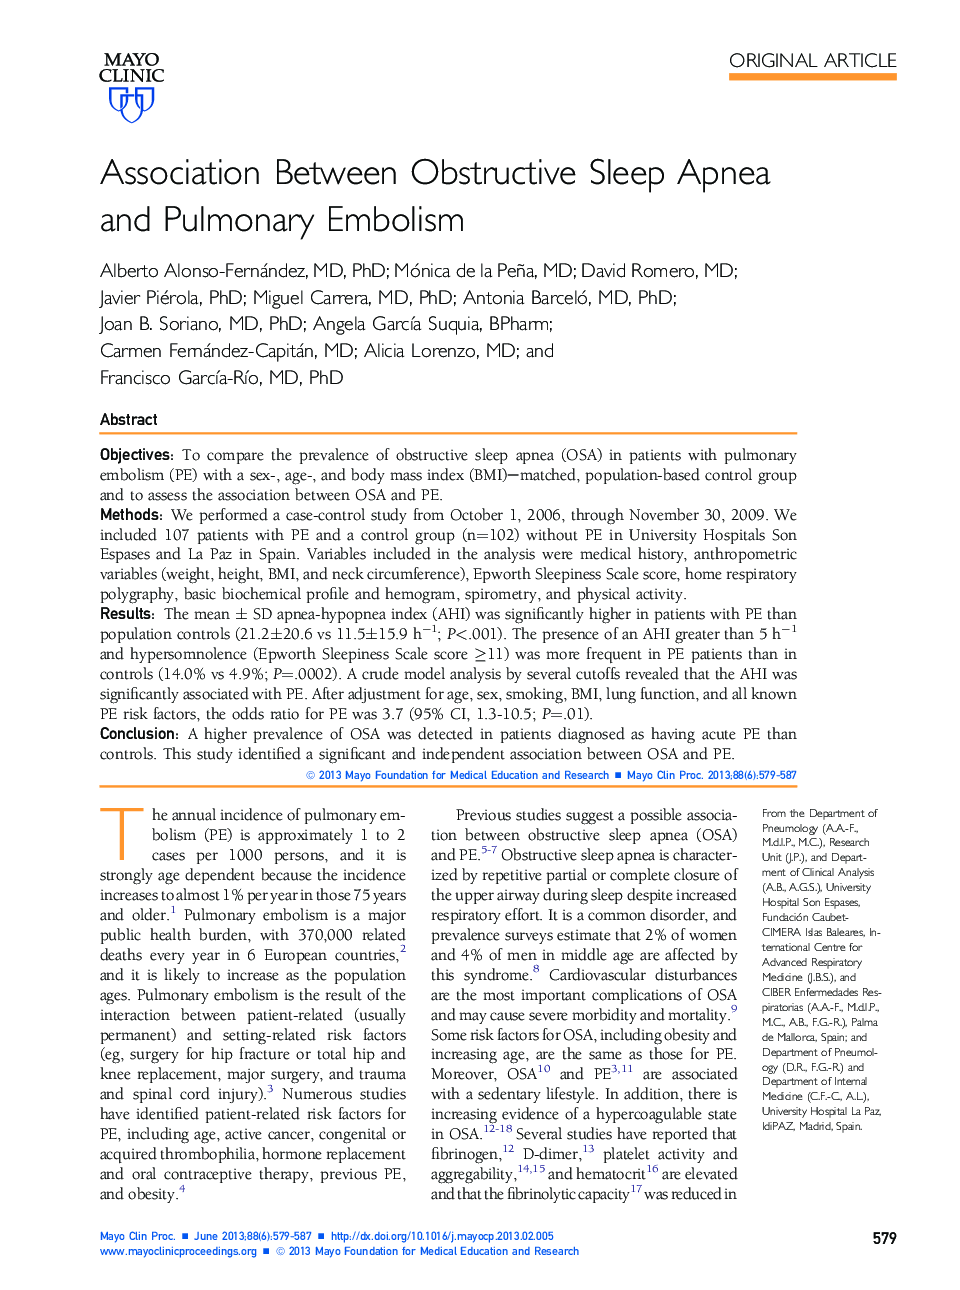 Association Between Obstructive Sleep Apnea and Pulmonary Embolism